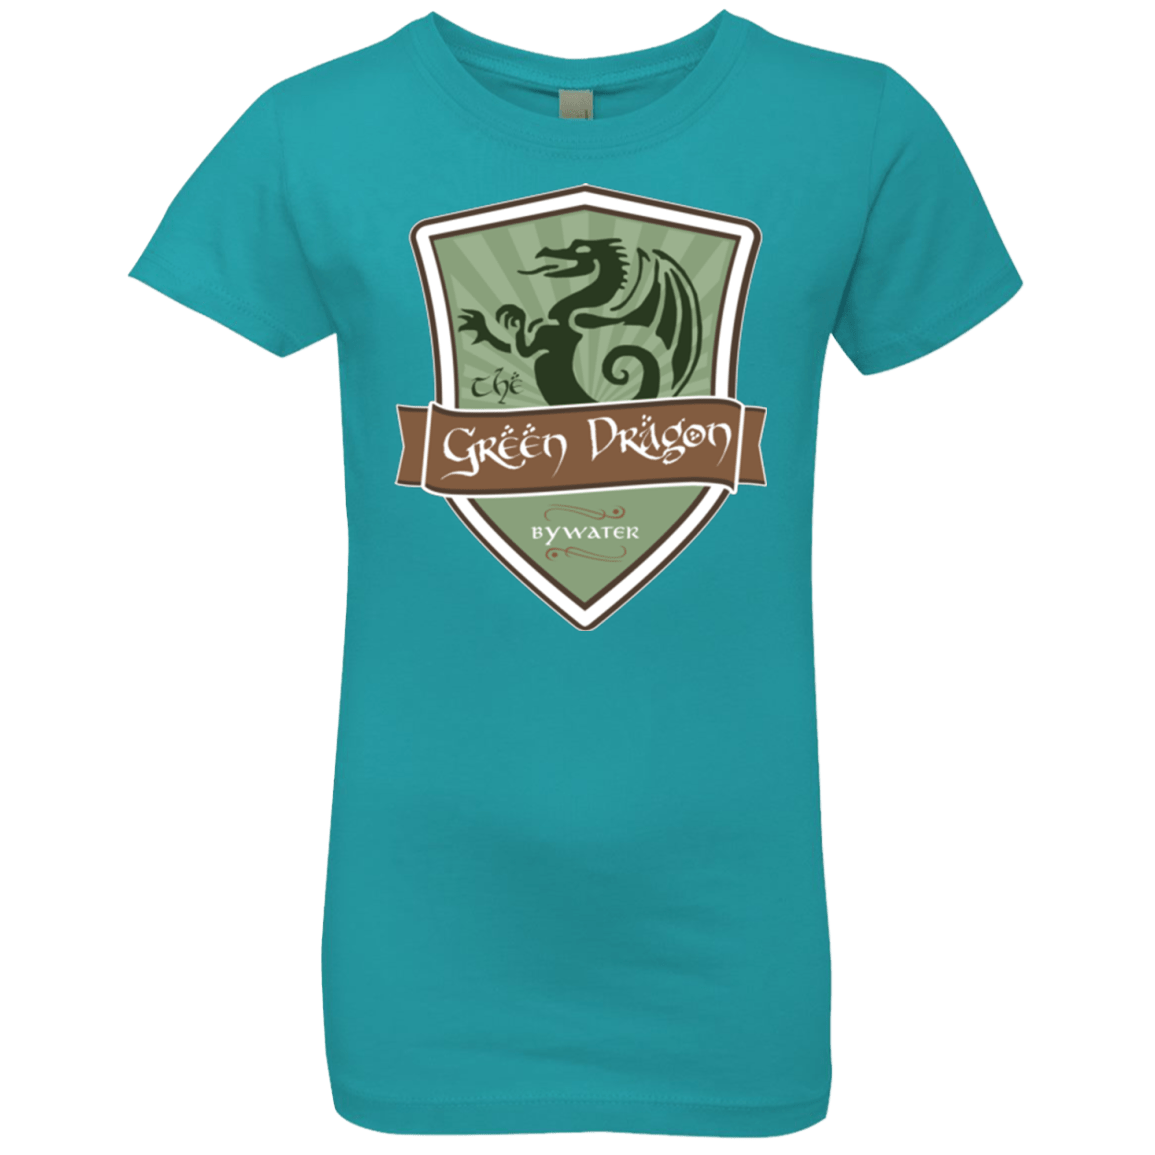 T-Shirts Tahiti Blue / YXS Green Dragon (1) Girls Premium T-Shirt